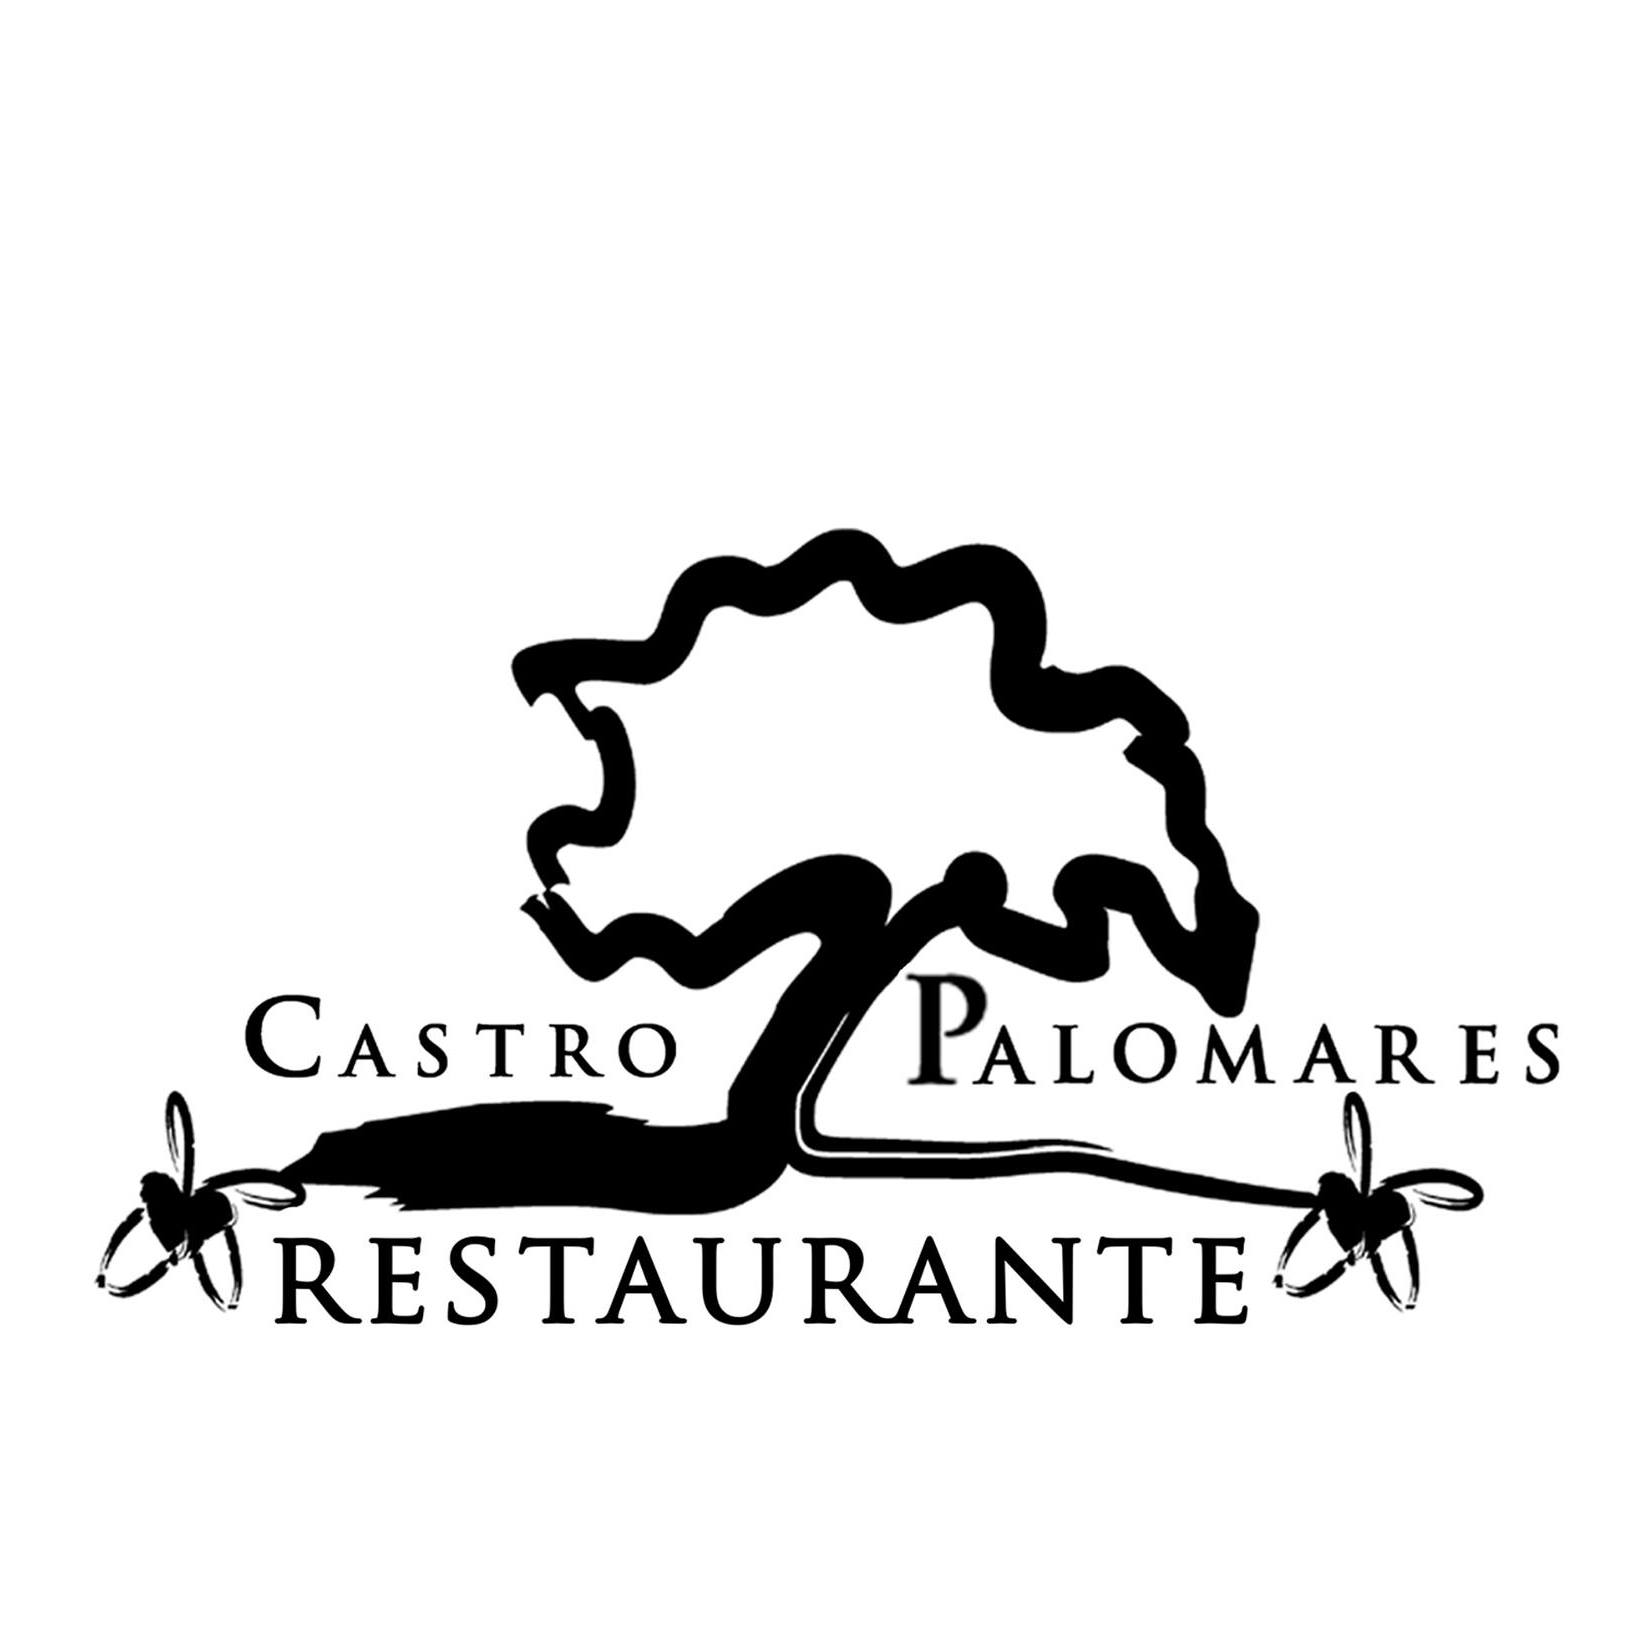 CASTRO PALOMARES Restaurante